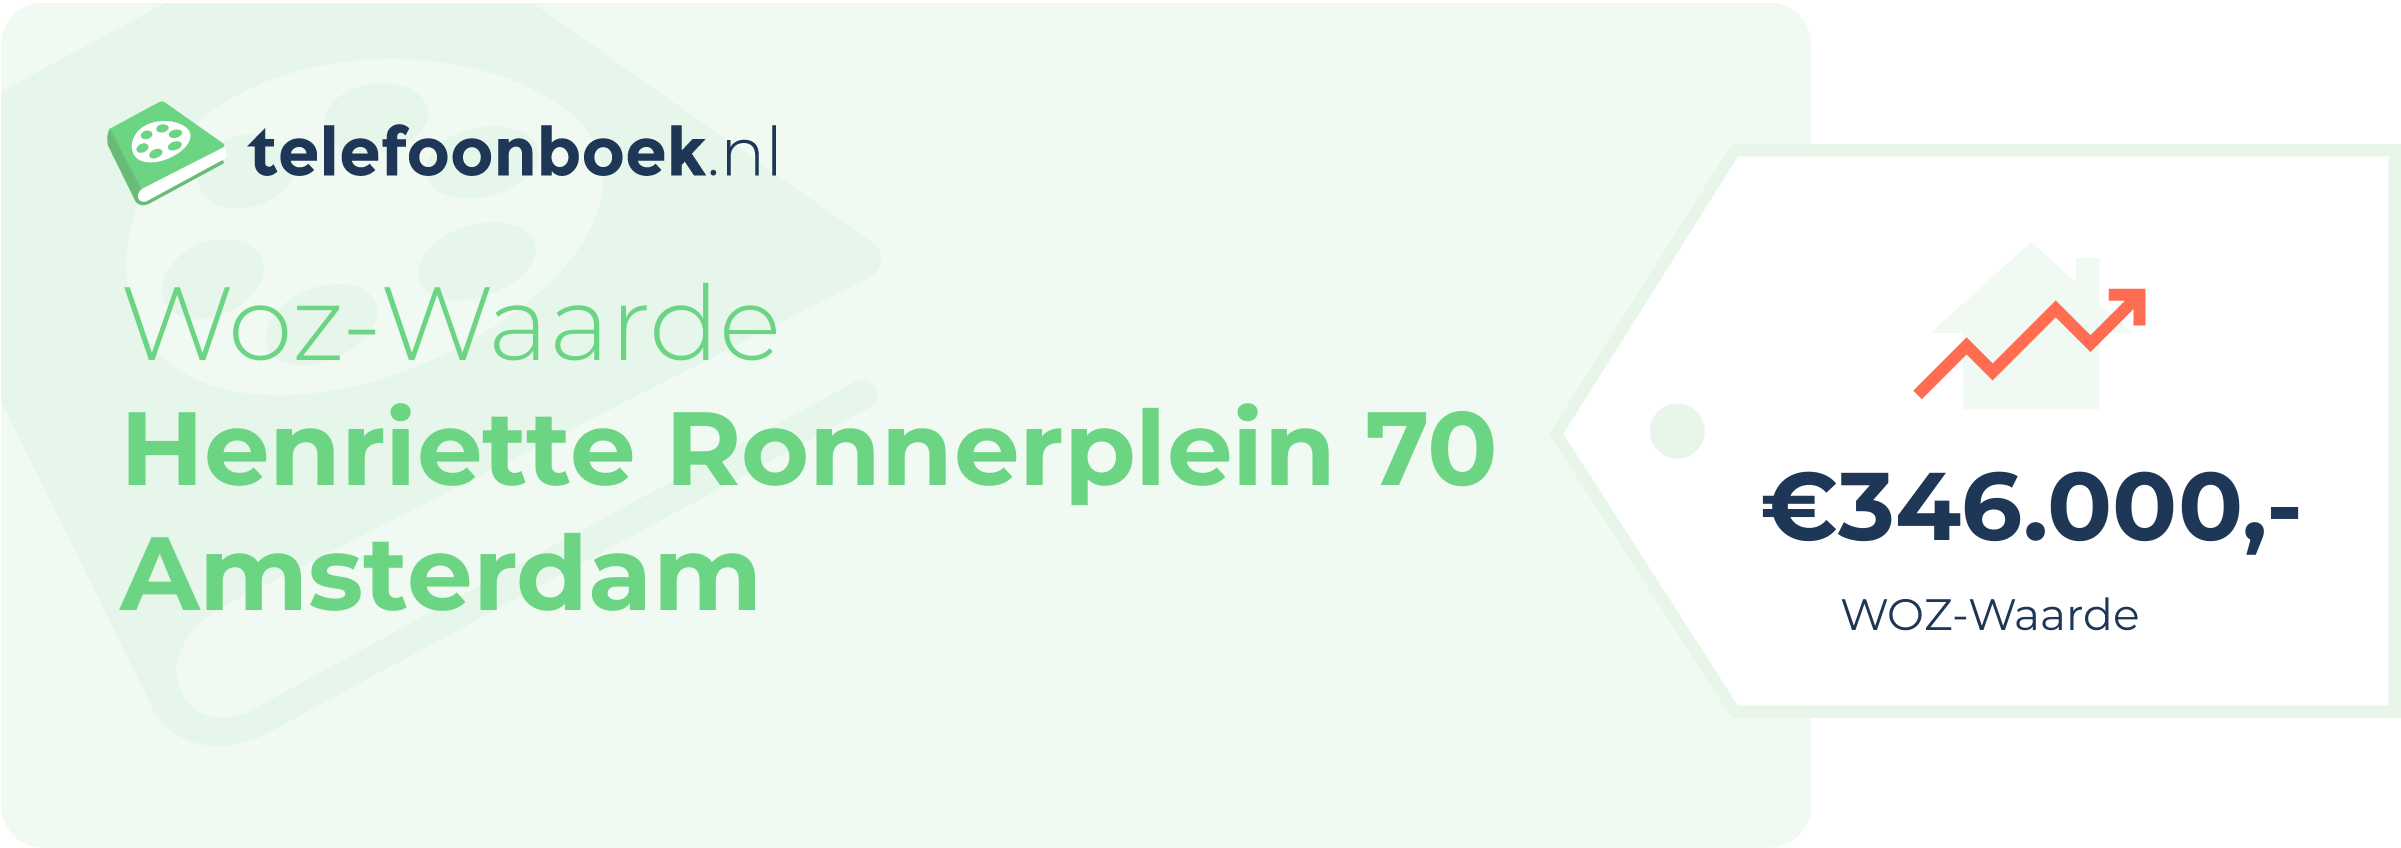 WOZ-waarde Henriette Ronnerplein 70 Amsterdam